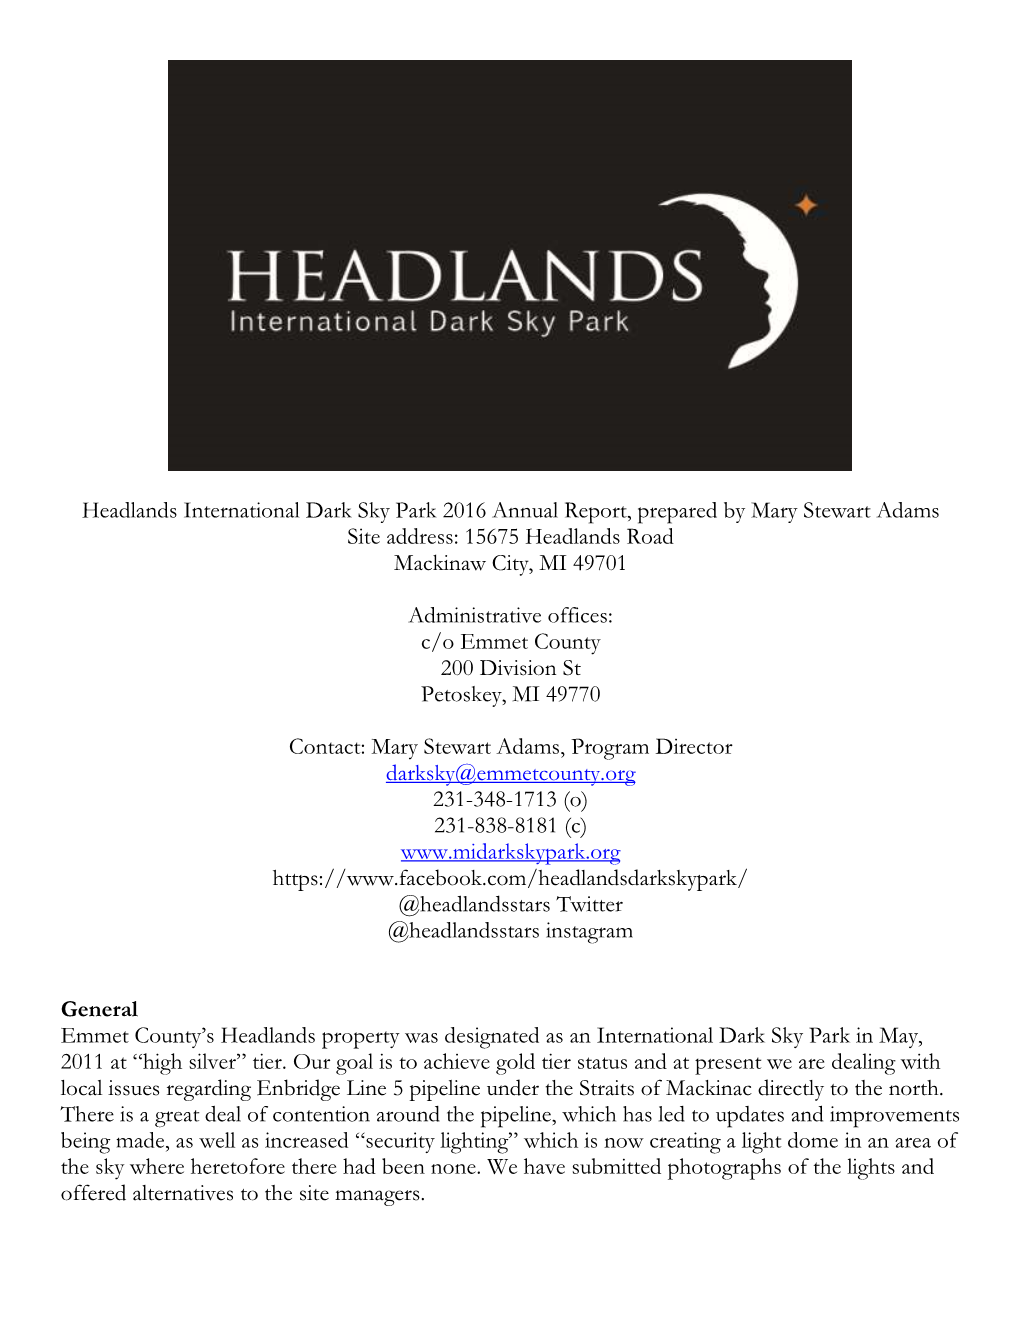 Headlands International Dark Sky Park 2016 Annual Report, Prepared by Mary Stewart Adams Site Address: 15675 Headlands Road Mackinaw City, MI 49701